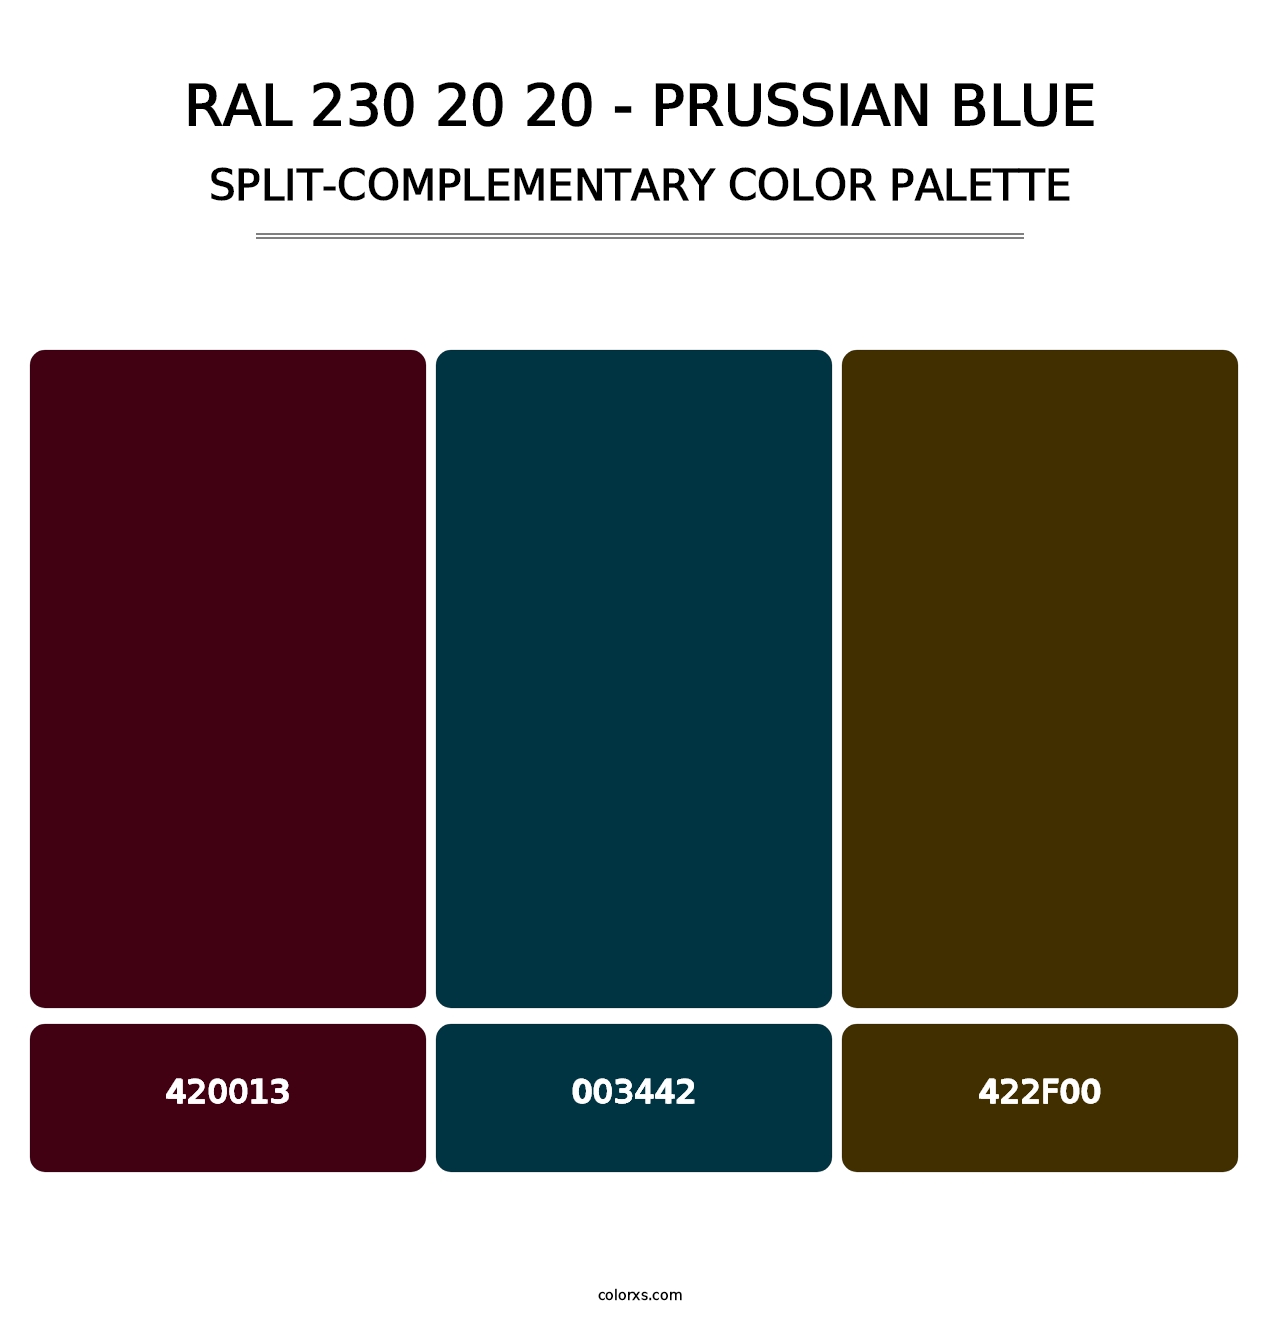 RAL 230 20 20 - Prussian Blue - Split-Complementary Color Palette